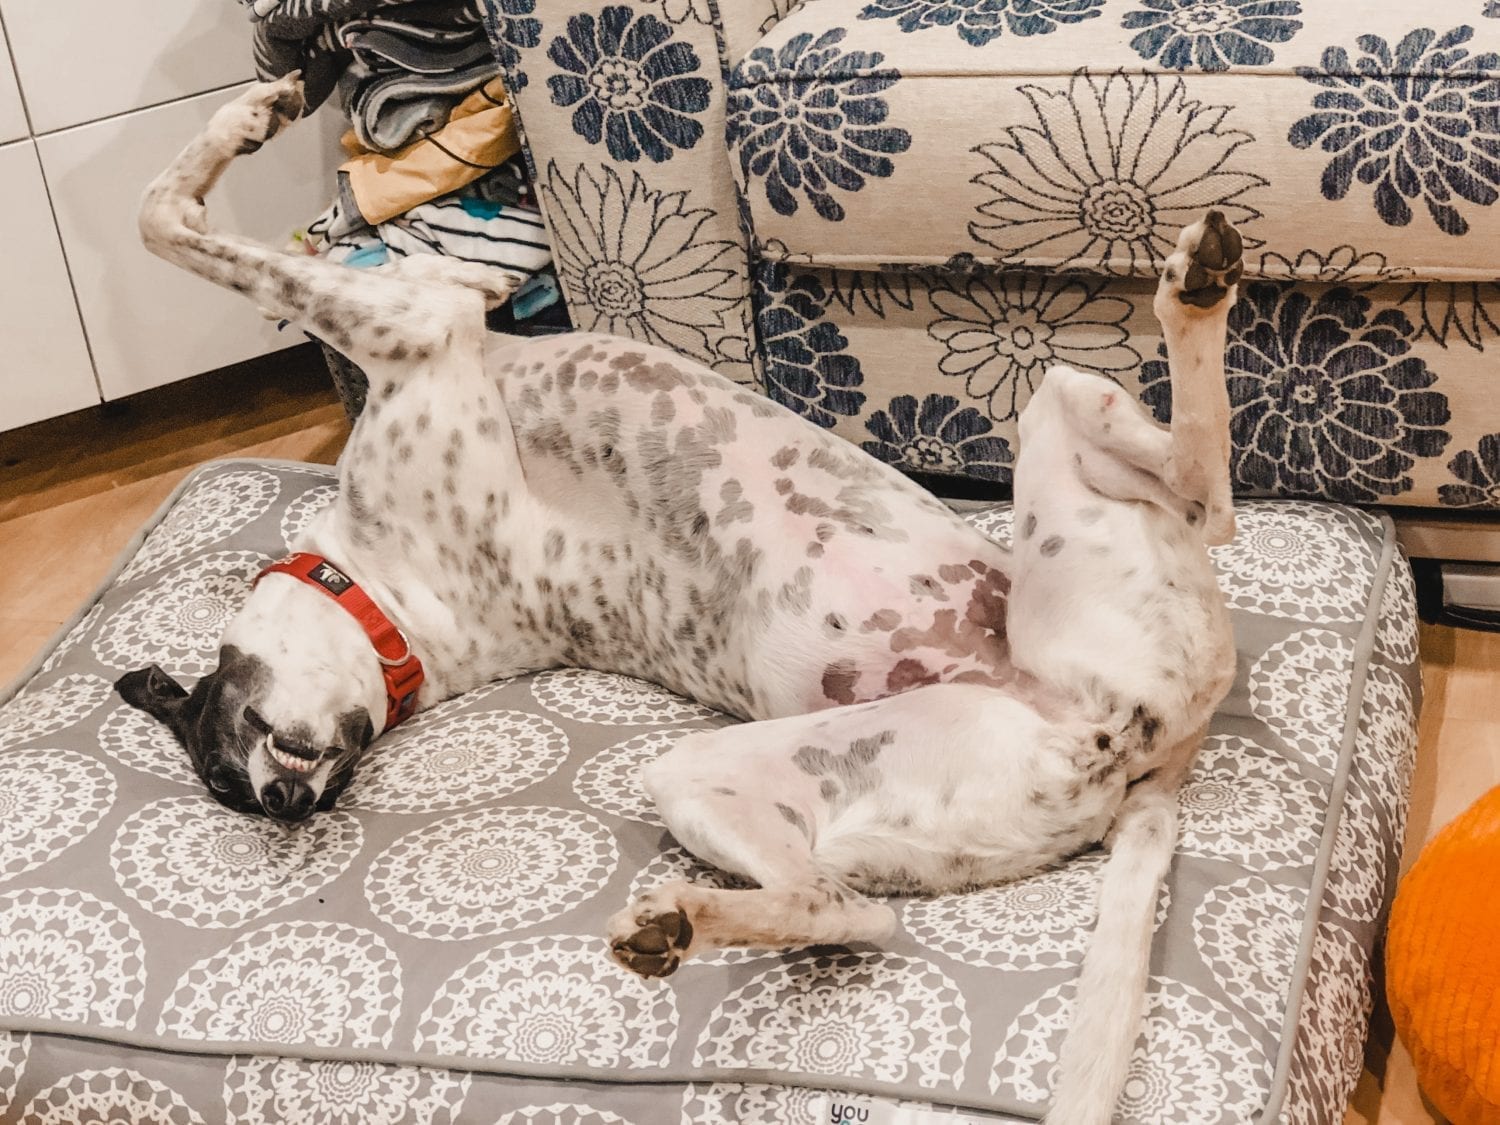 Greyhound lying upside down roaching